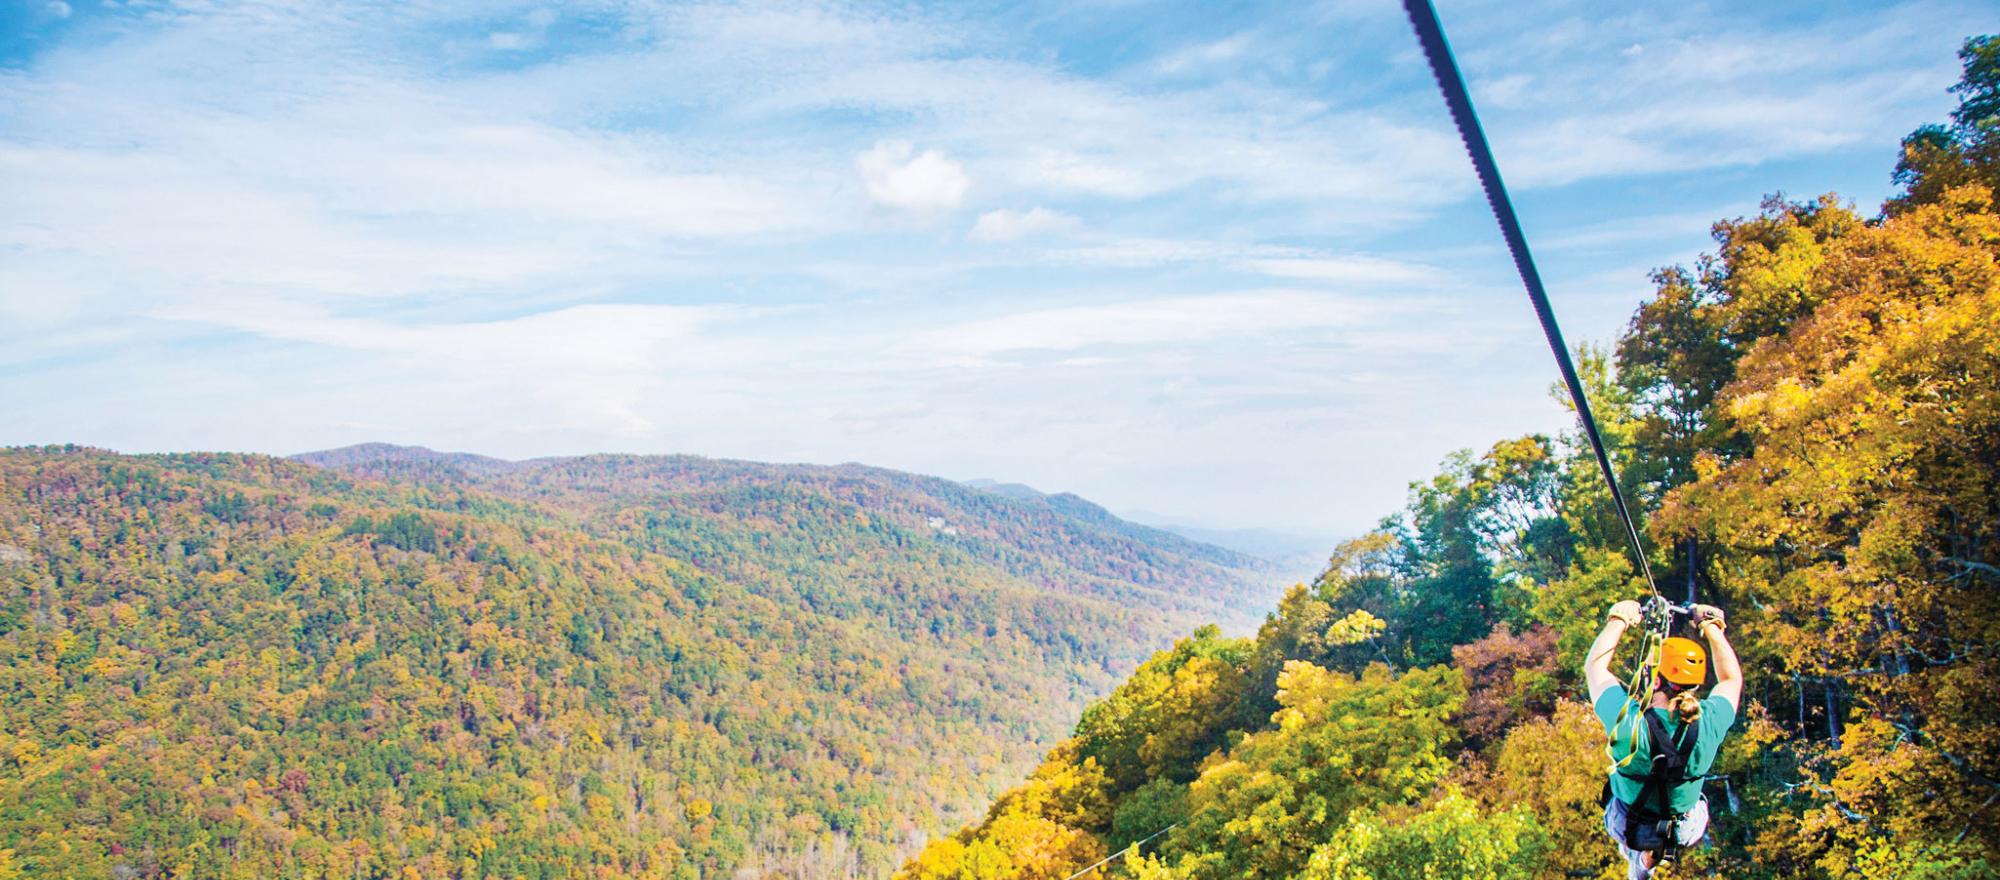 Ziplining provides stunning views in all seasons. (Photo: The Gorge Zipline)